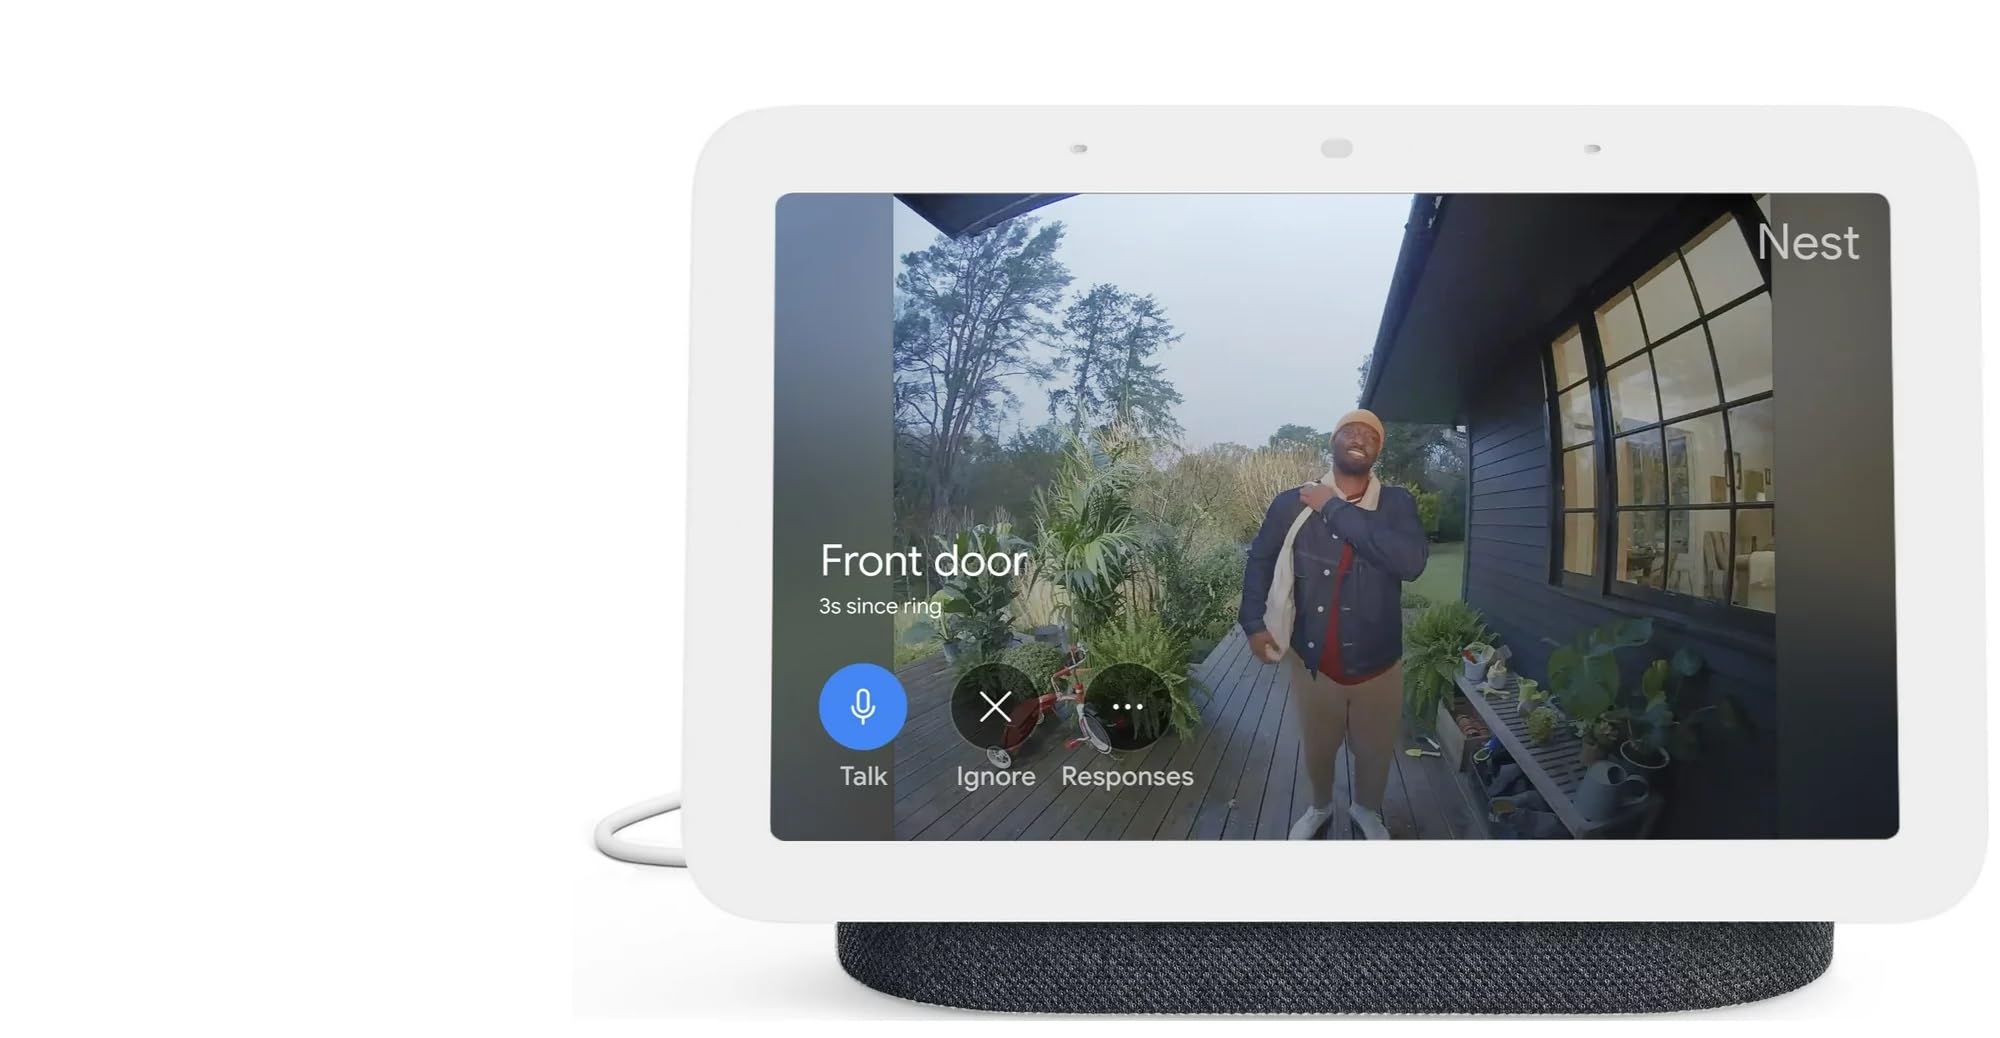 Google Nest Hub 2nd Generation Smart Display with Google Assistant - Chalk